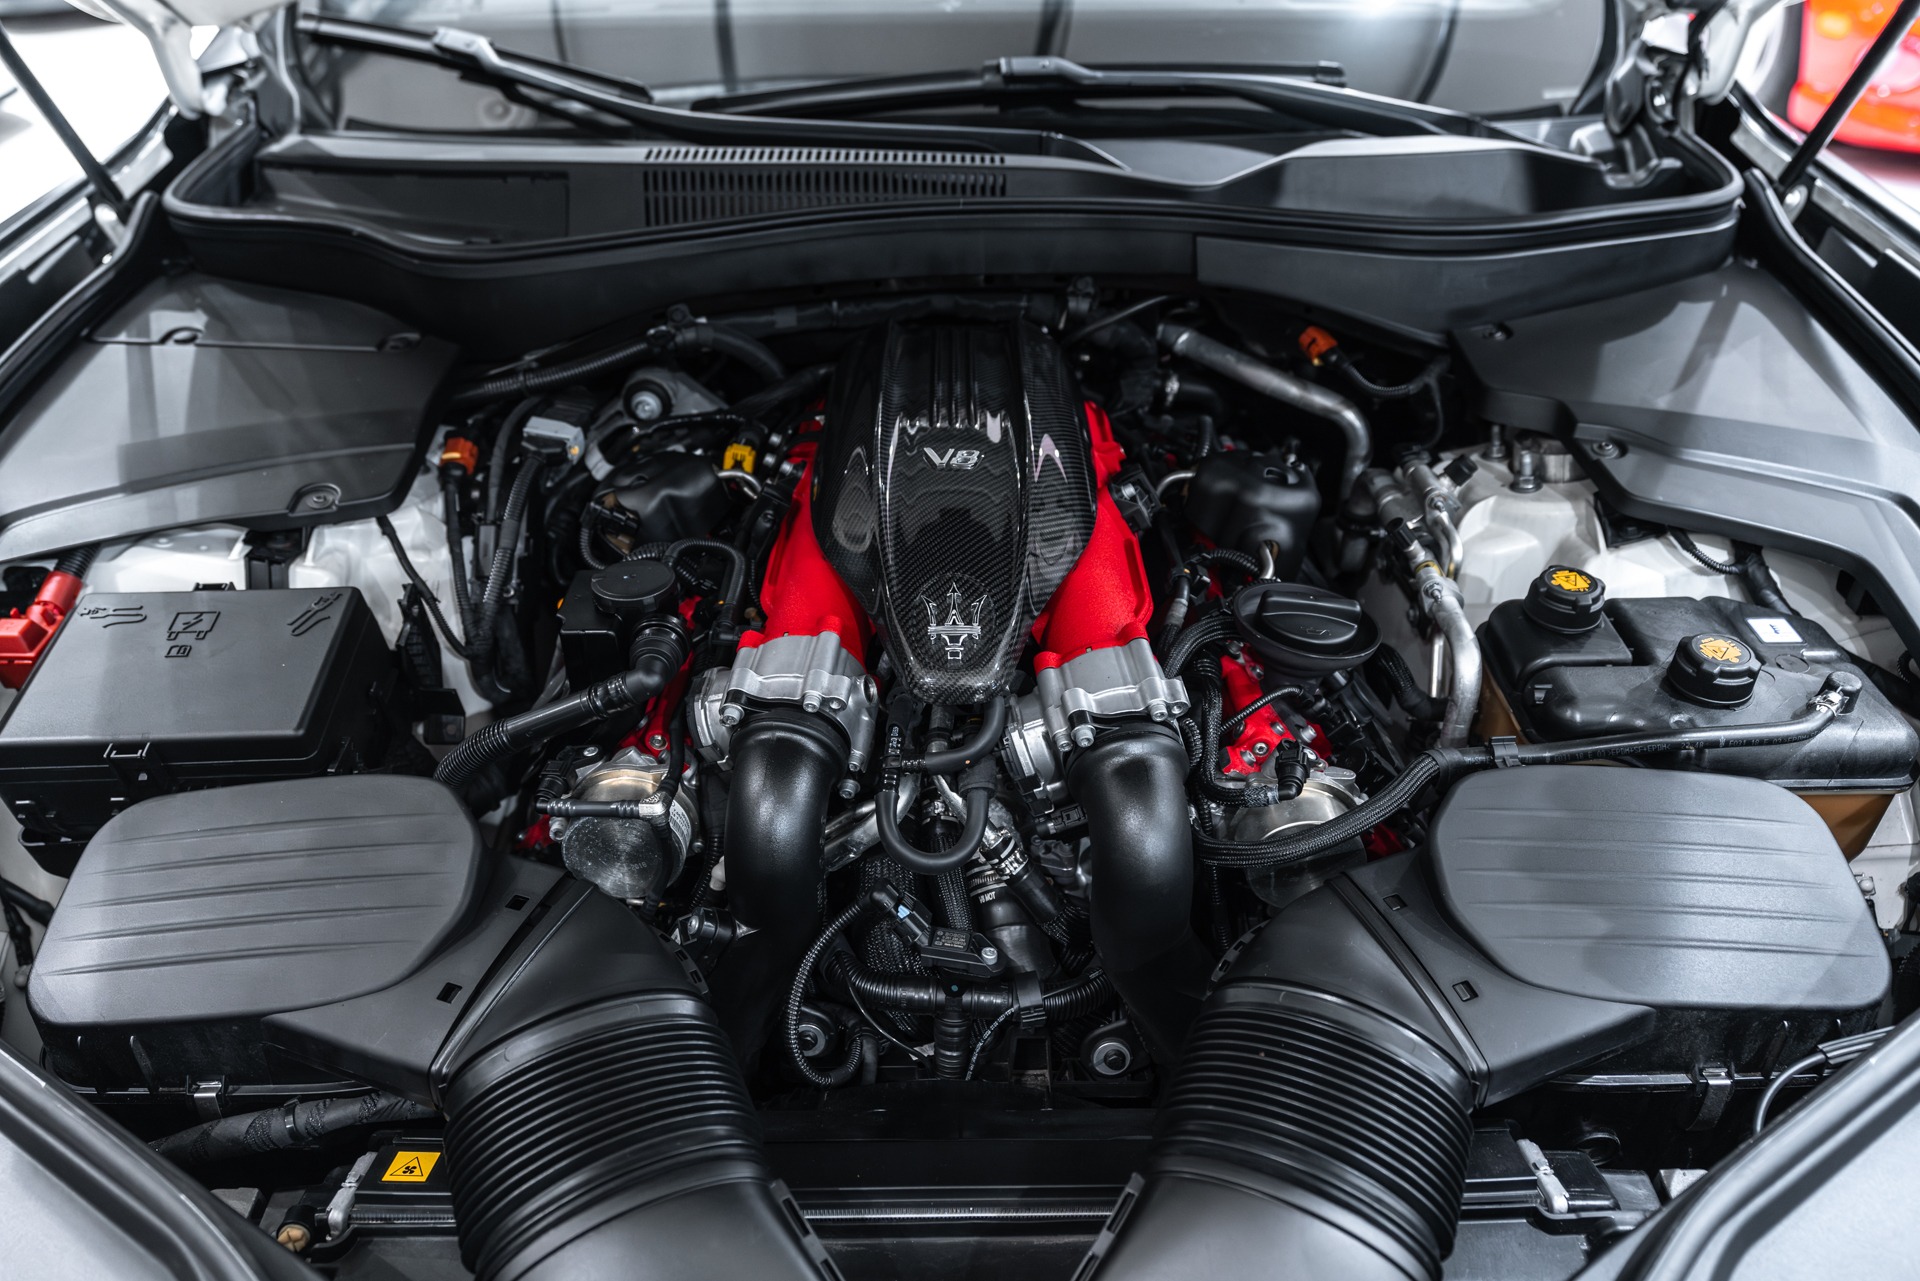 Used-2019-Maserati-Levante-Trofeo-Launch-Edition-1-of-44-AWD-SUV-Carbon-Fiber-Trim-Low-Miles-590HP